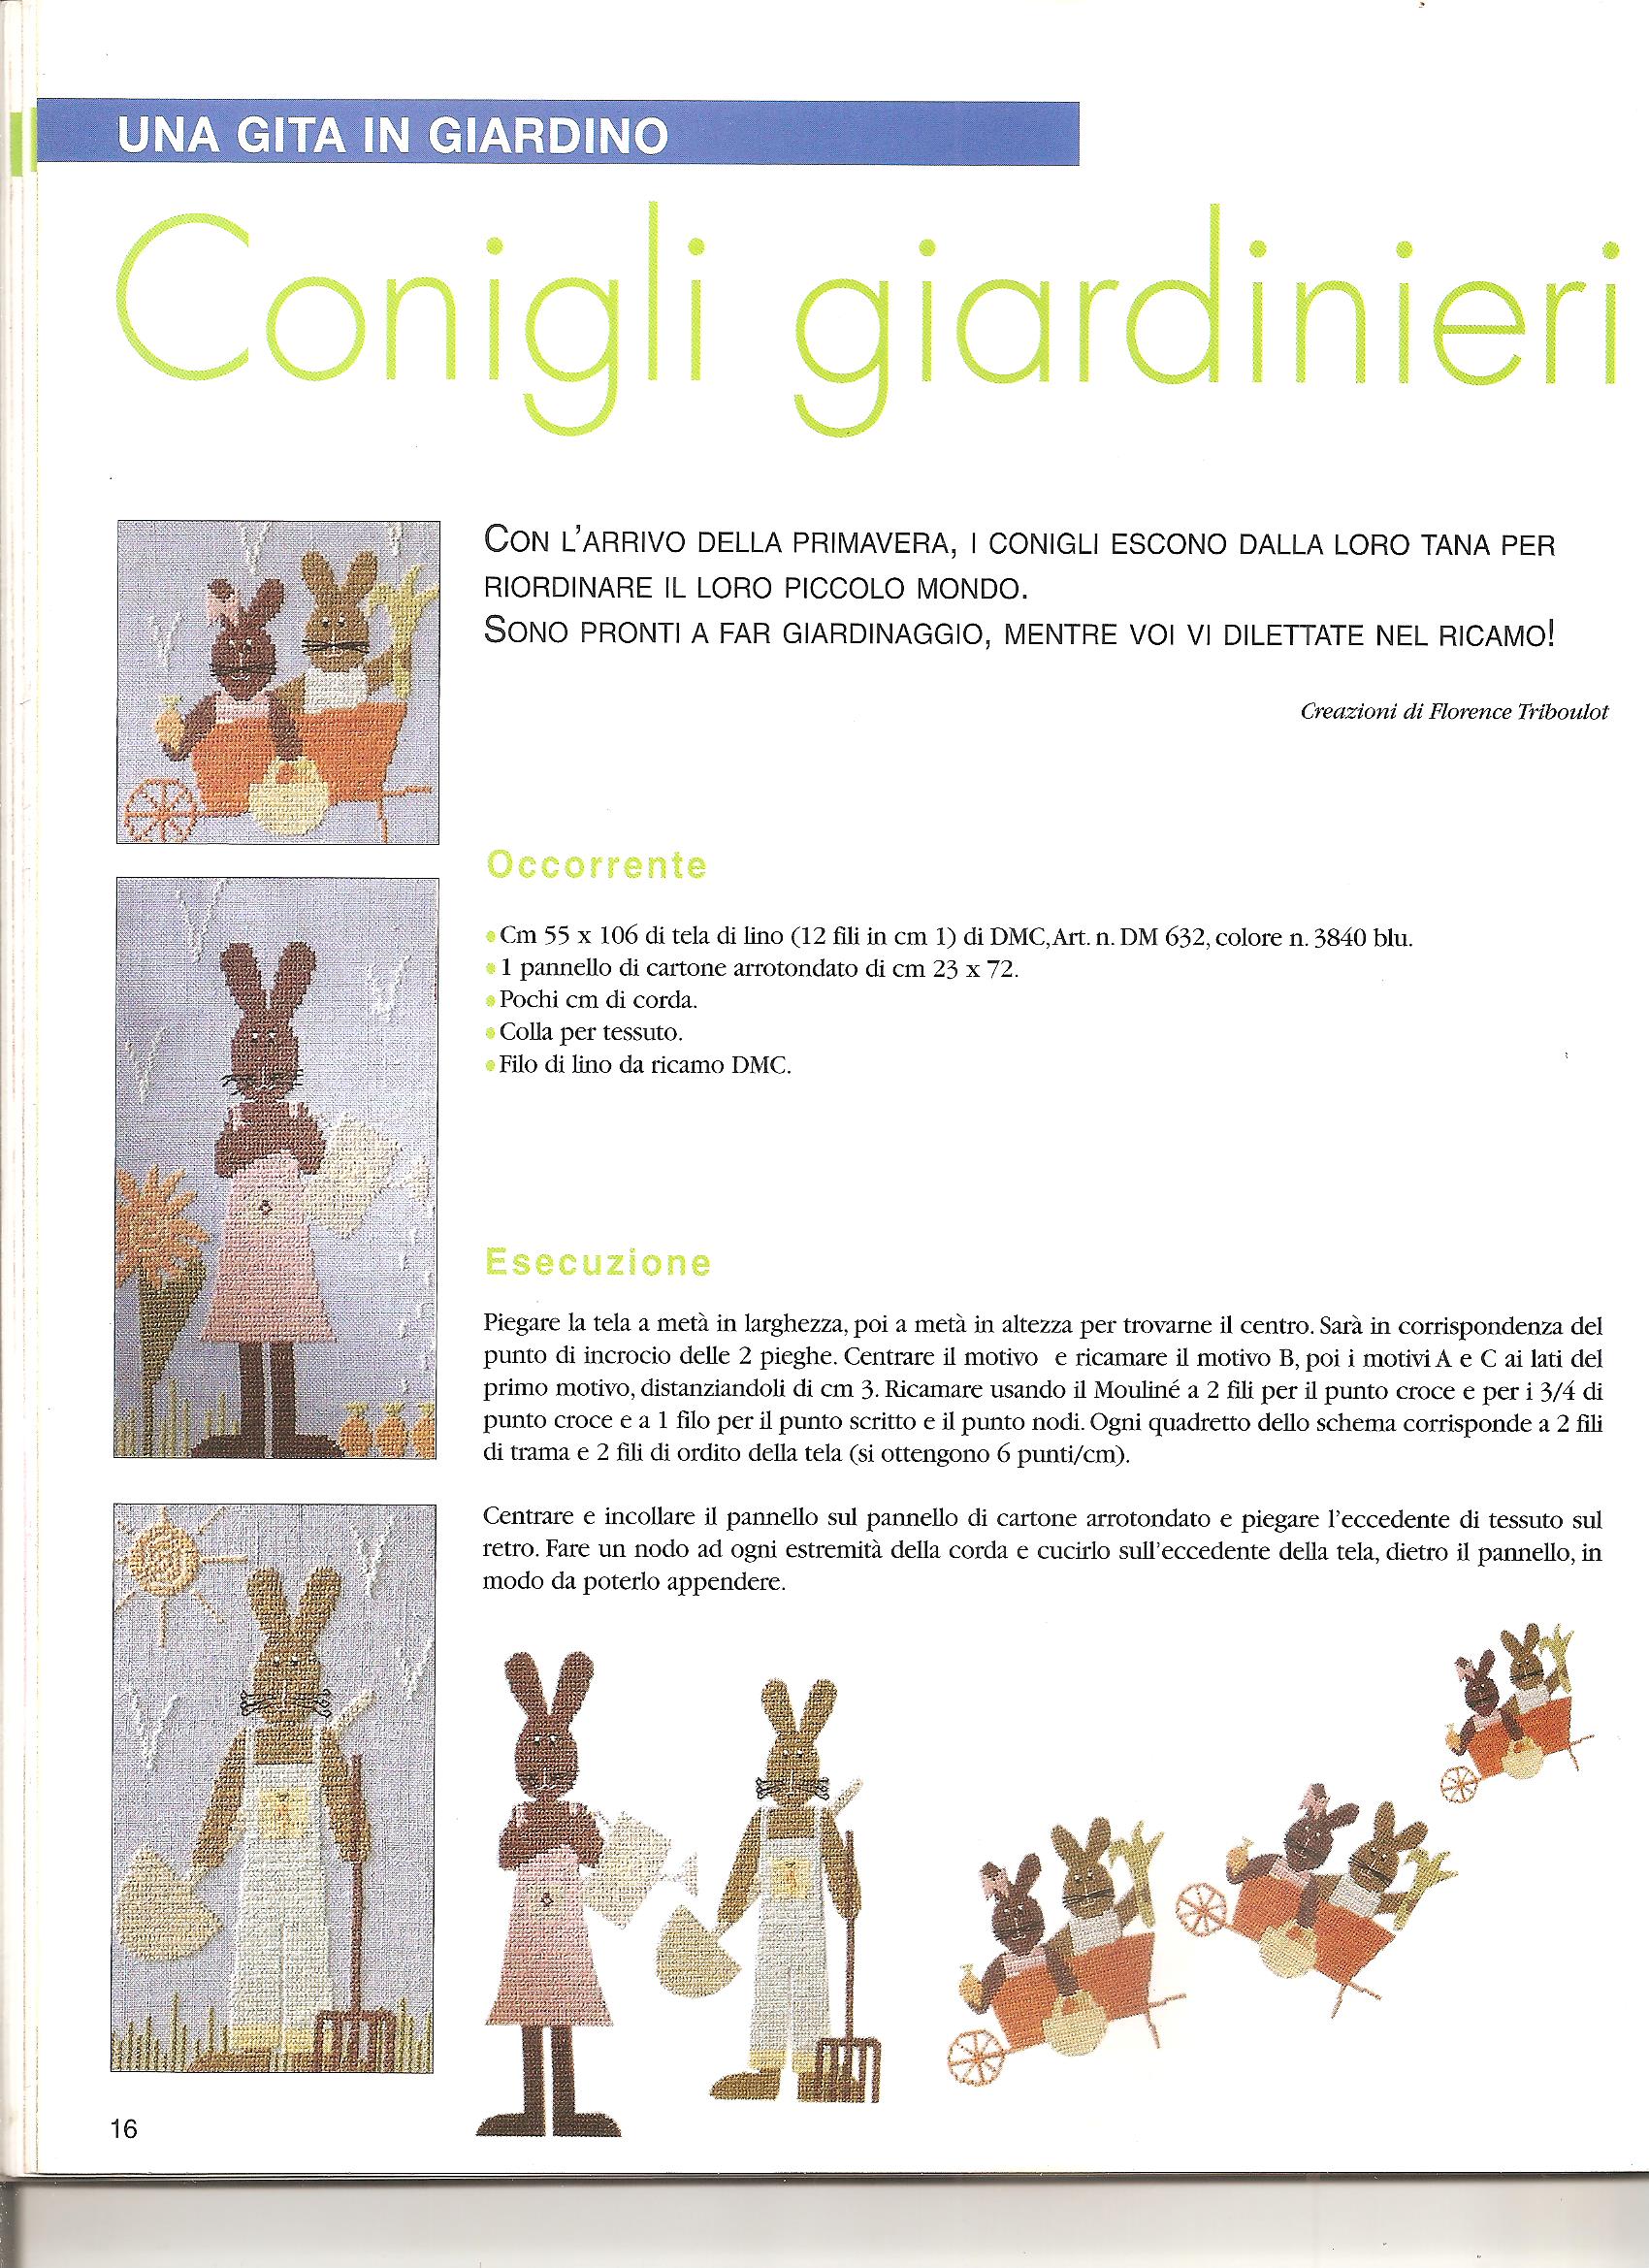 Cross stitch patterns of gardeners rabbits (1)